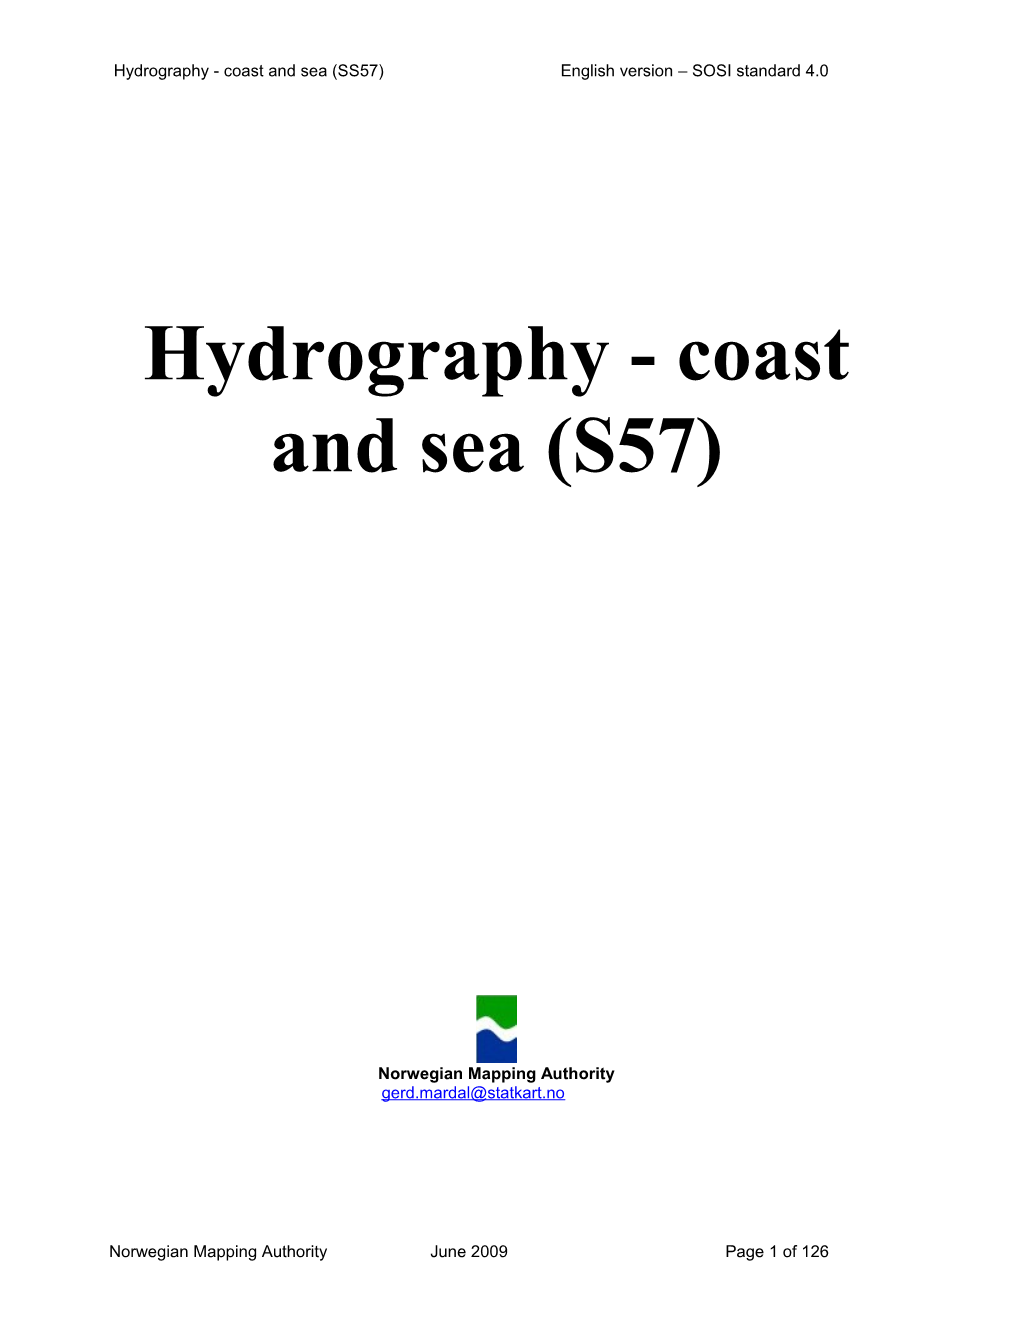 Hydrography - Coast and Sea (S57)